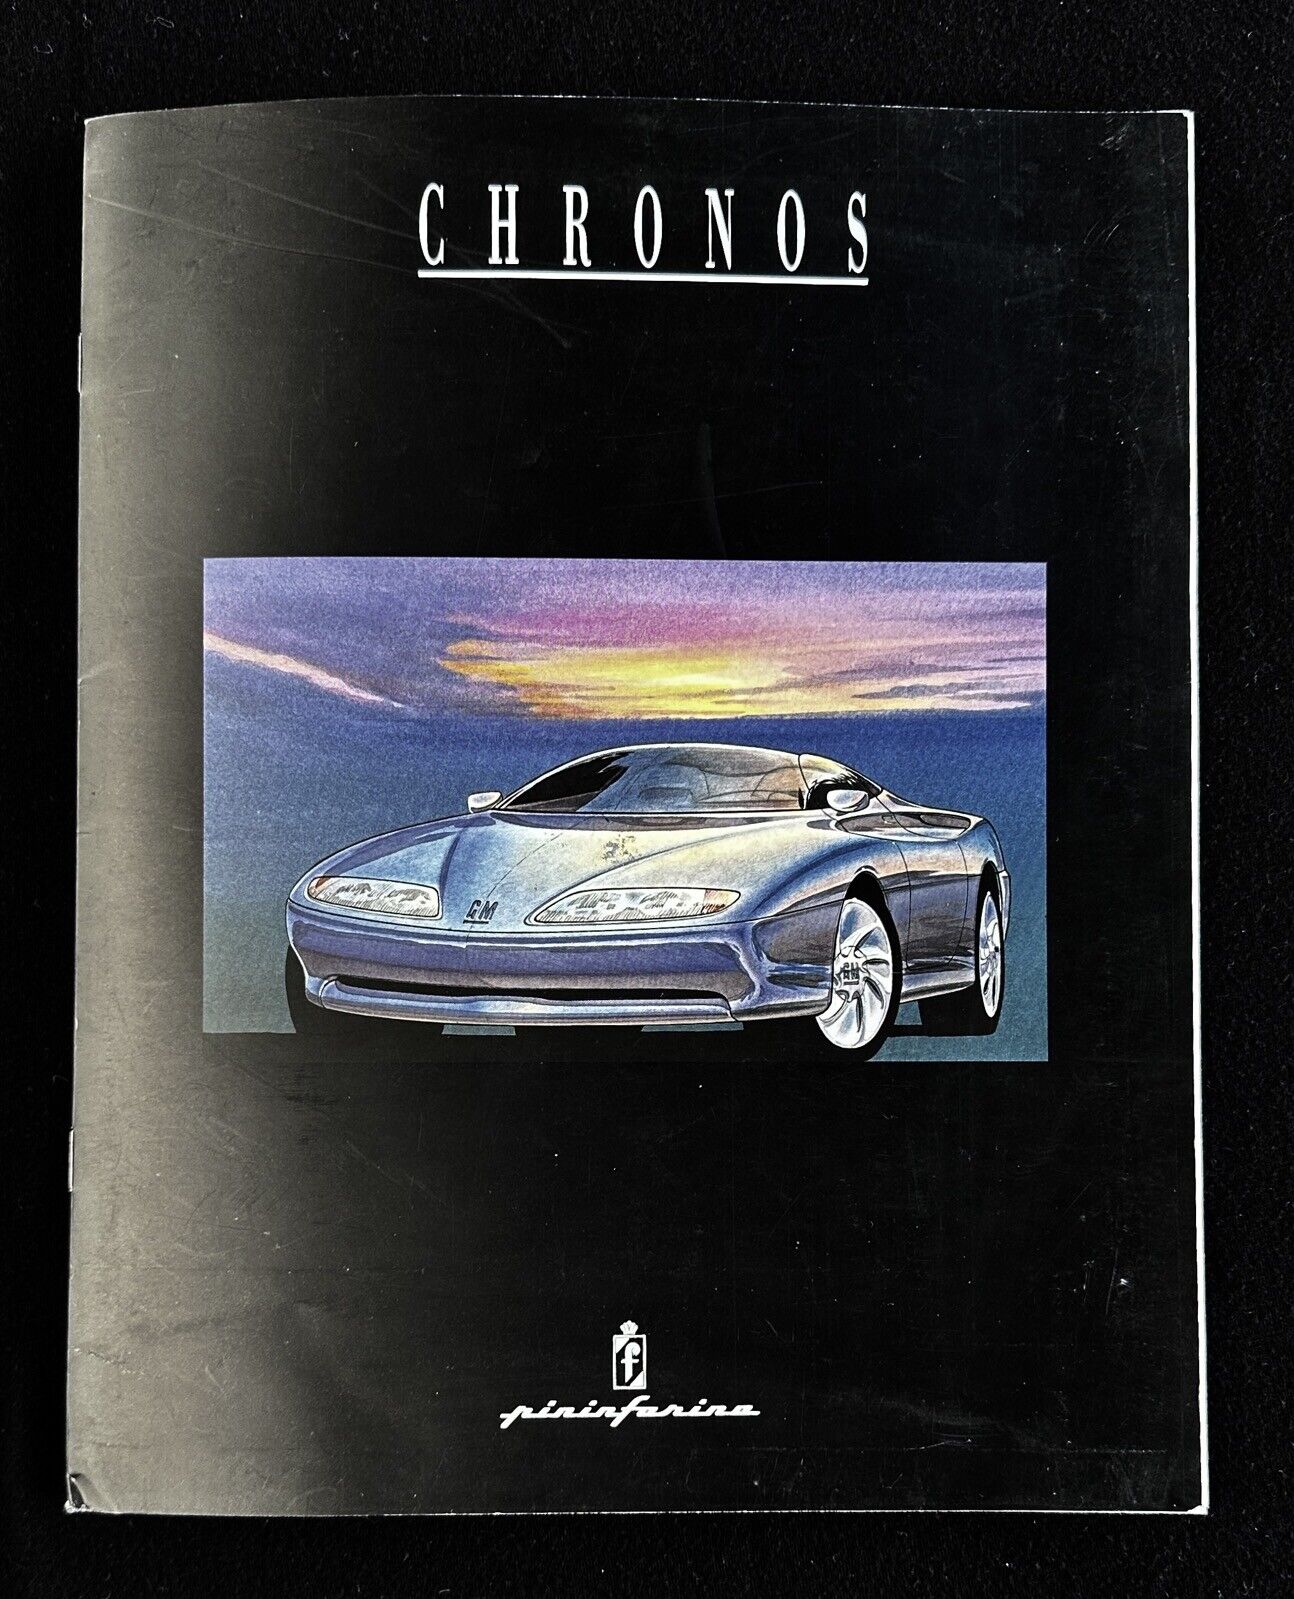 1991 Pininfarina Chronos Concept Car Press Kit Brochure Photos Italian English